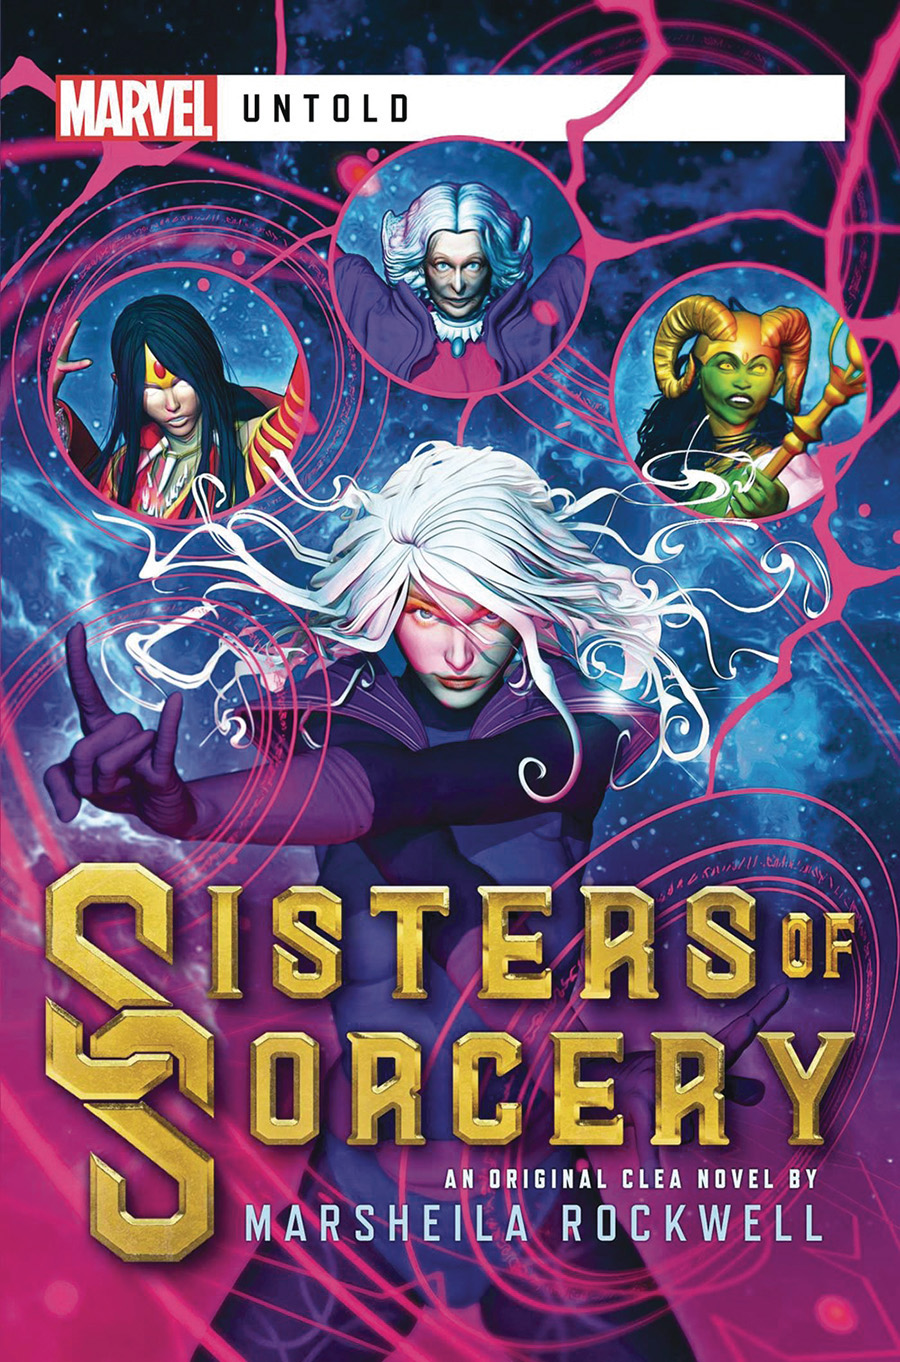 Marvel Untold Novel Sisters Of Sorcery SC